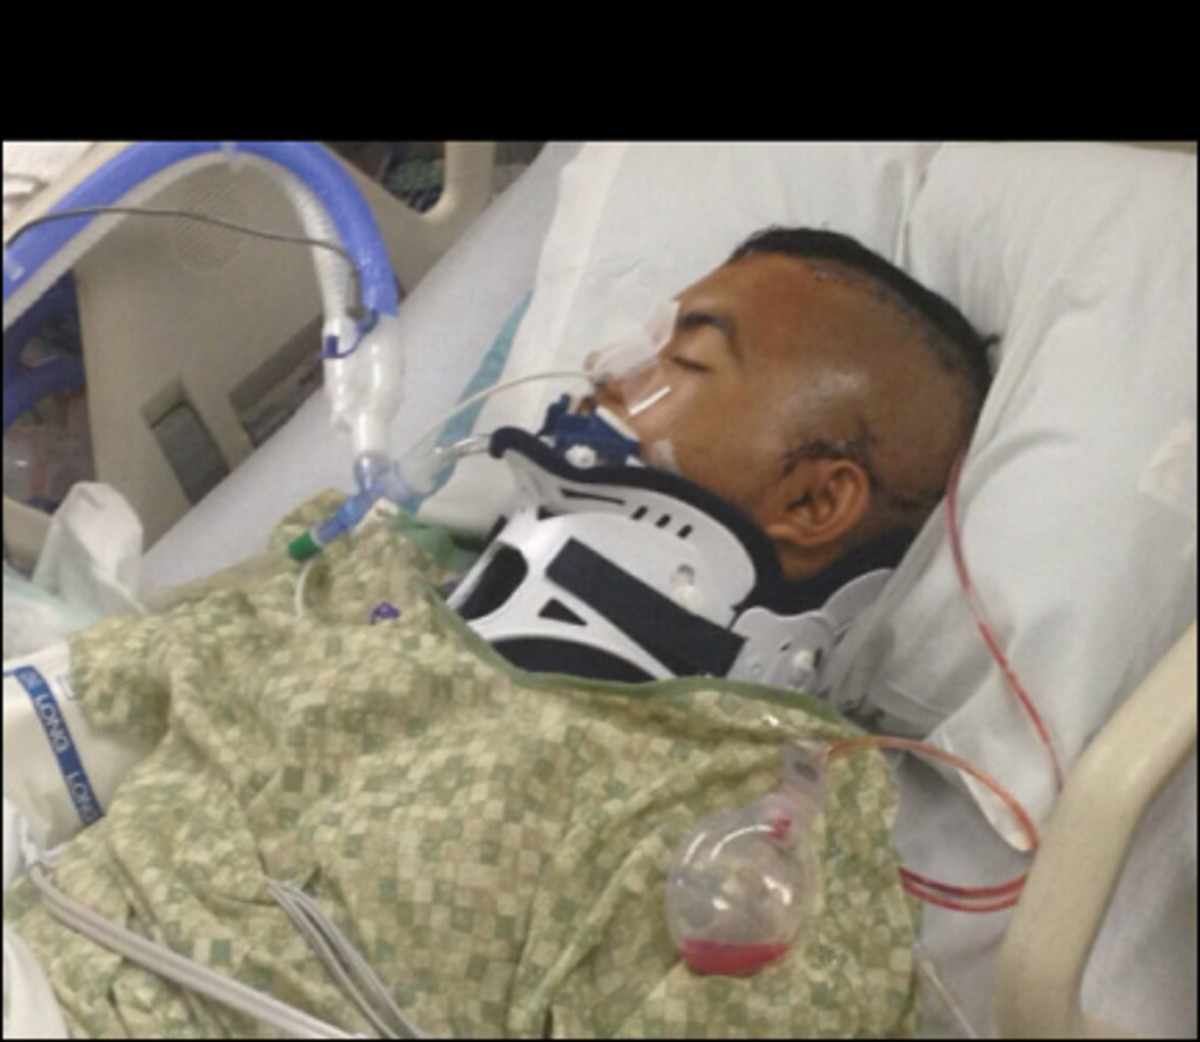 Noe Nino de Rivera in ICU with brain damage / image via Twitter.